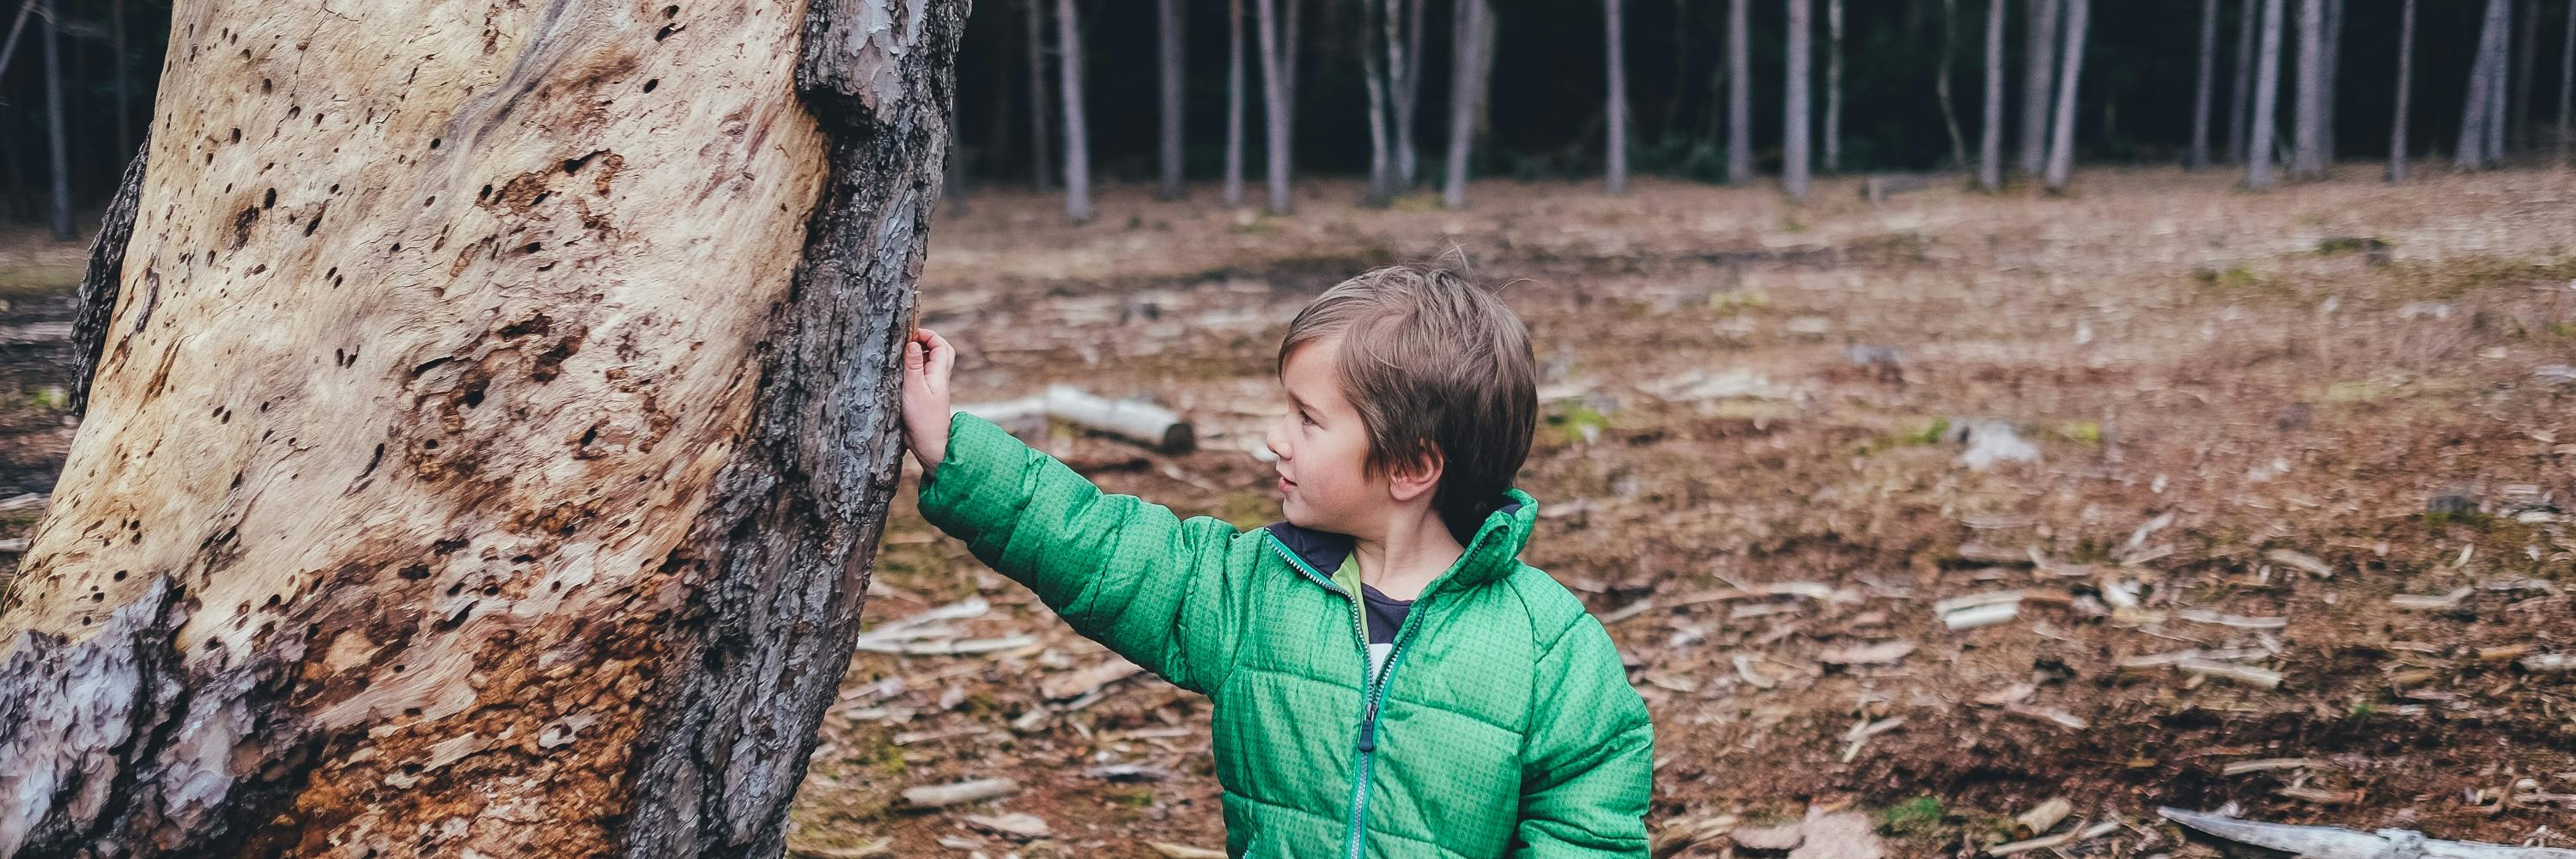 Kind im Wald berührt Baum